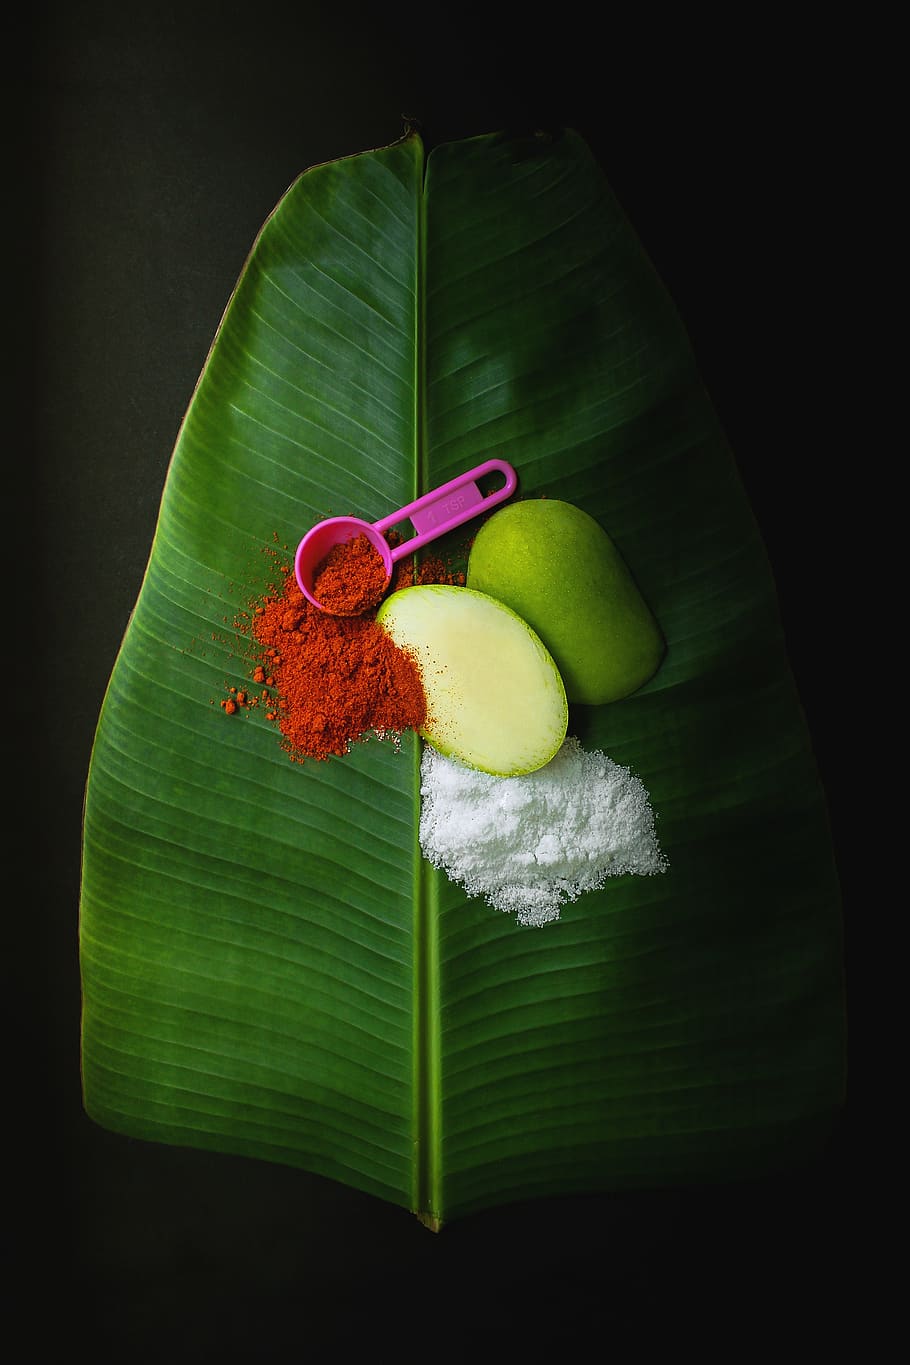 Green Mango With Chili Powder, banana leaf, chill, food, fruit